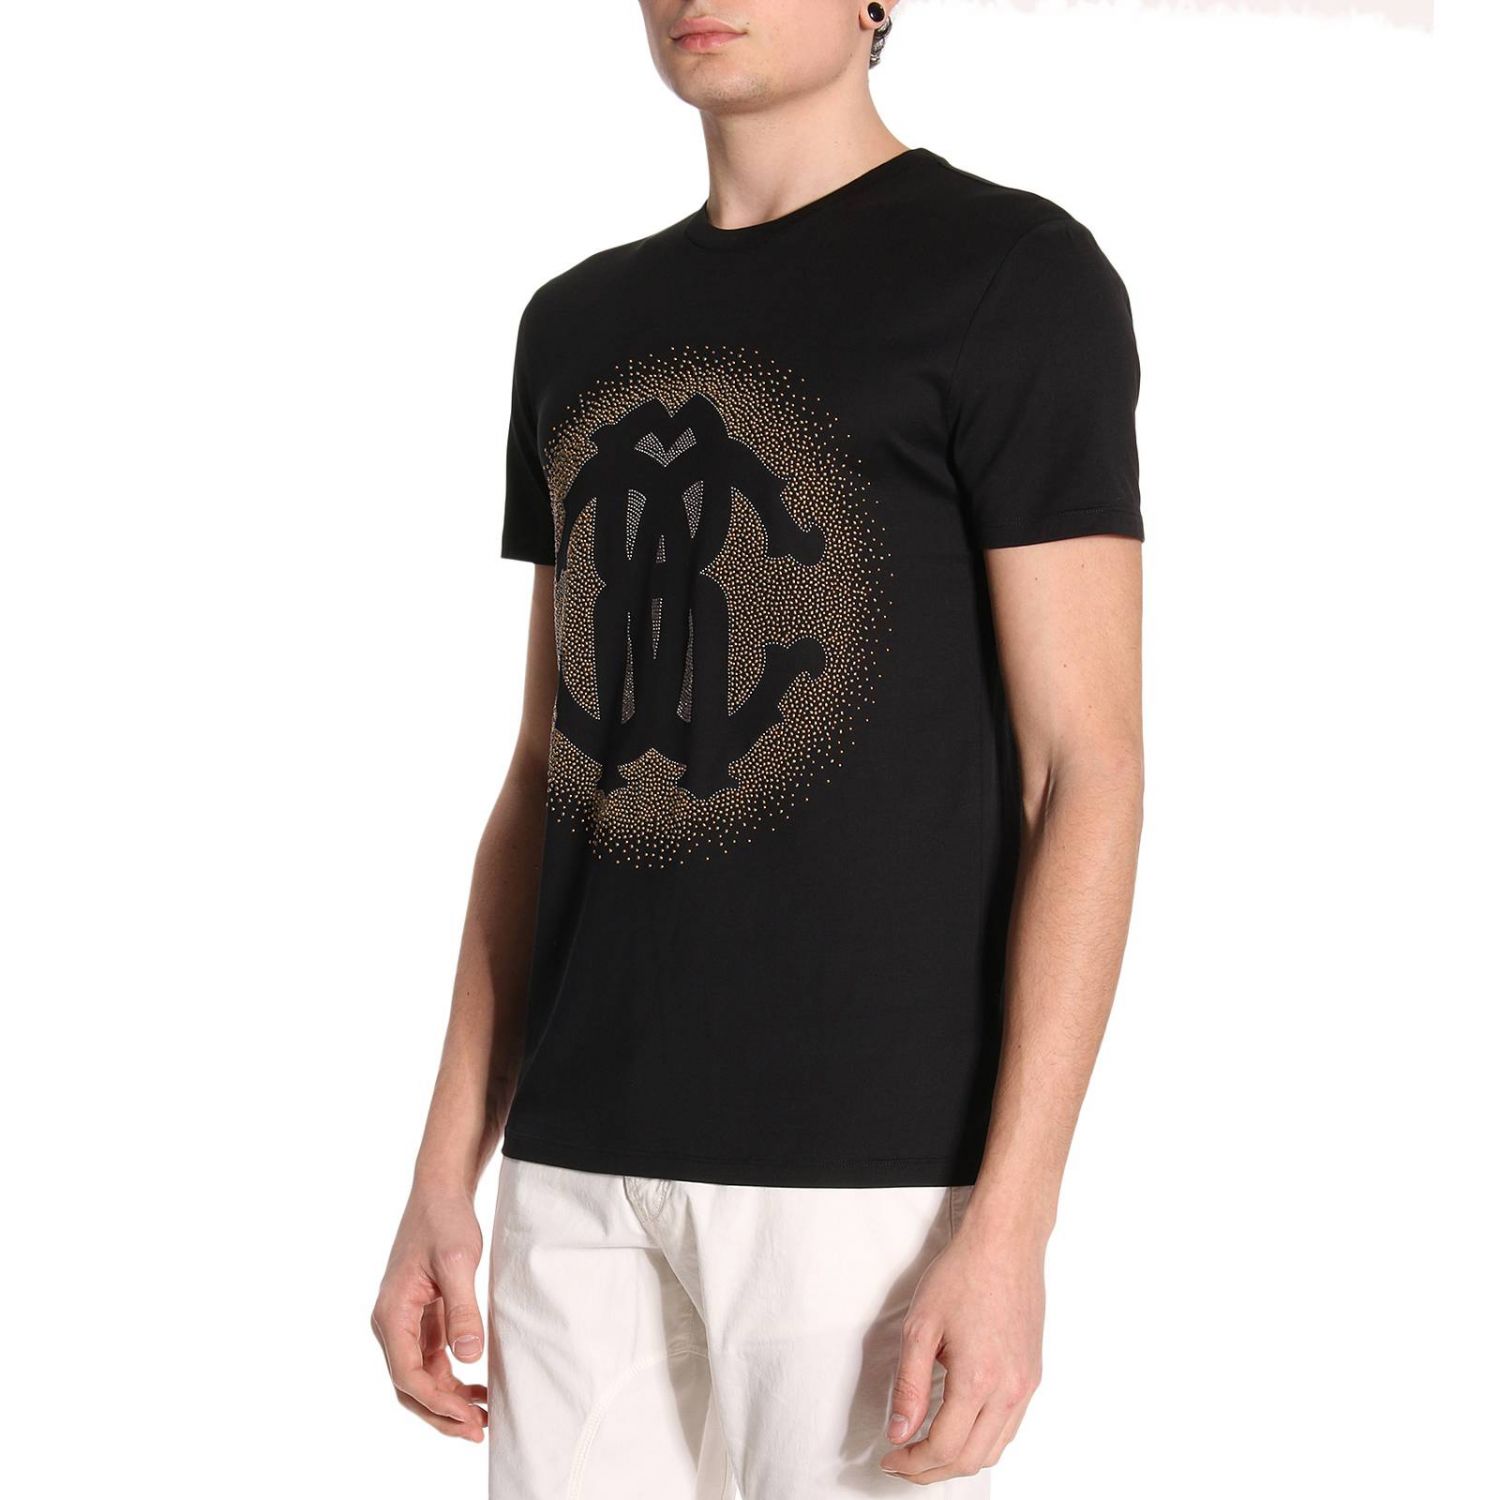 Roberto Cavalli Outlet: T-shirt men | T-Shirt Roberto Cavalli Men Black ...